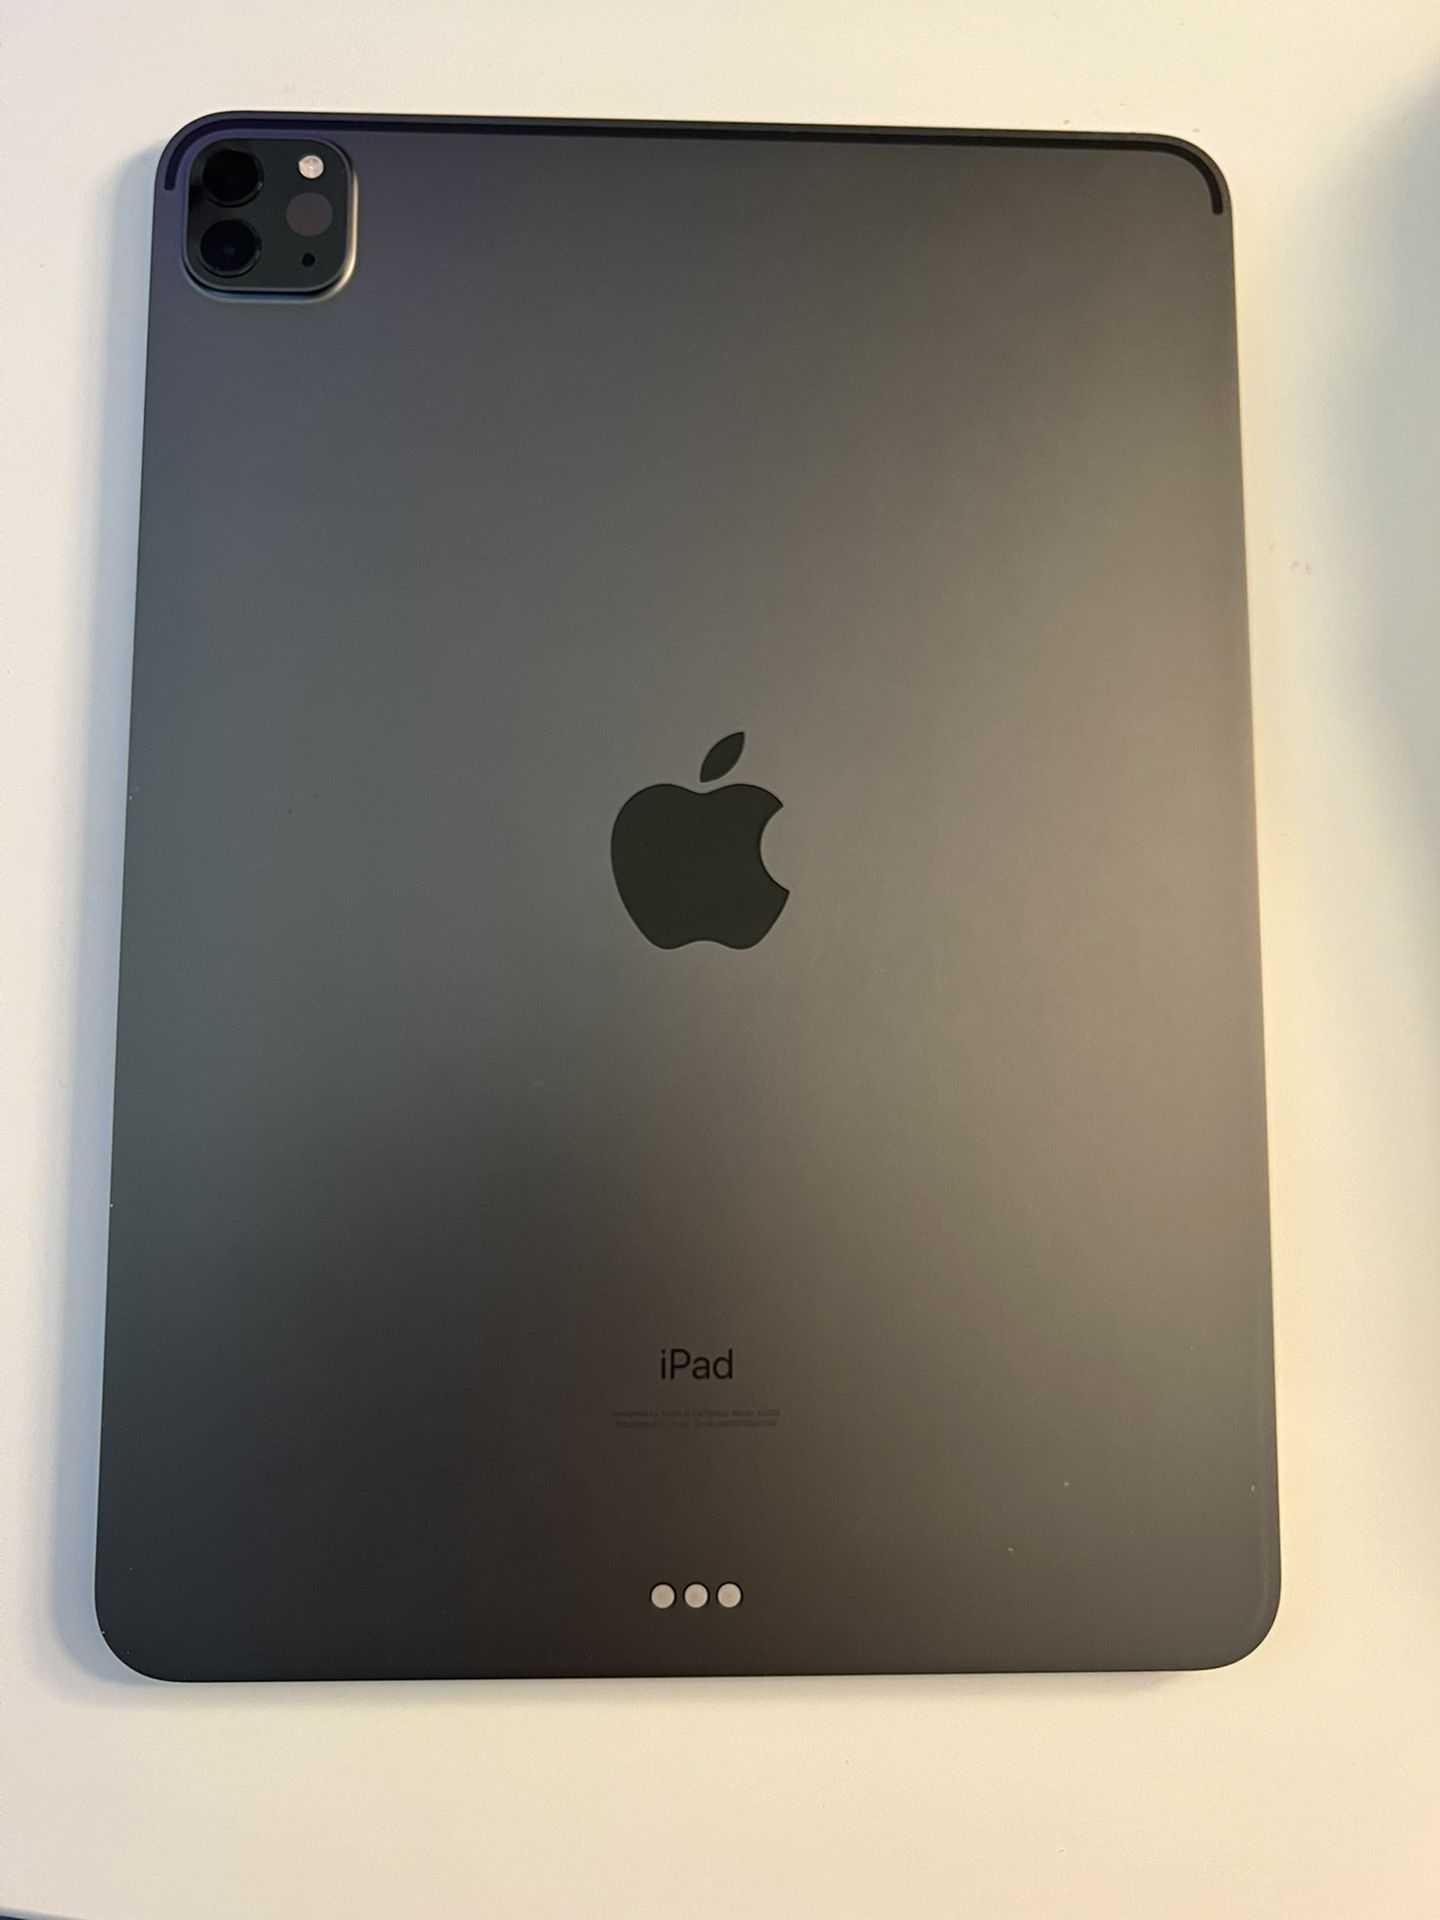 11 In 2020 iPad Pro 128GB Space Gray 